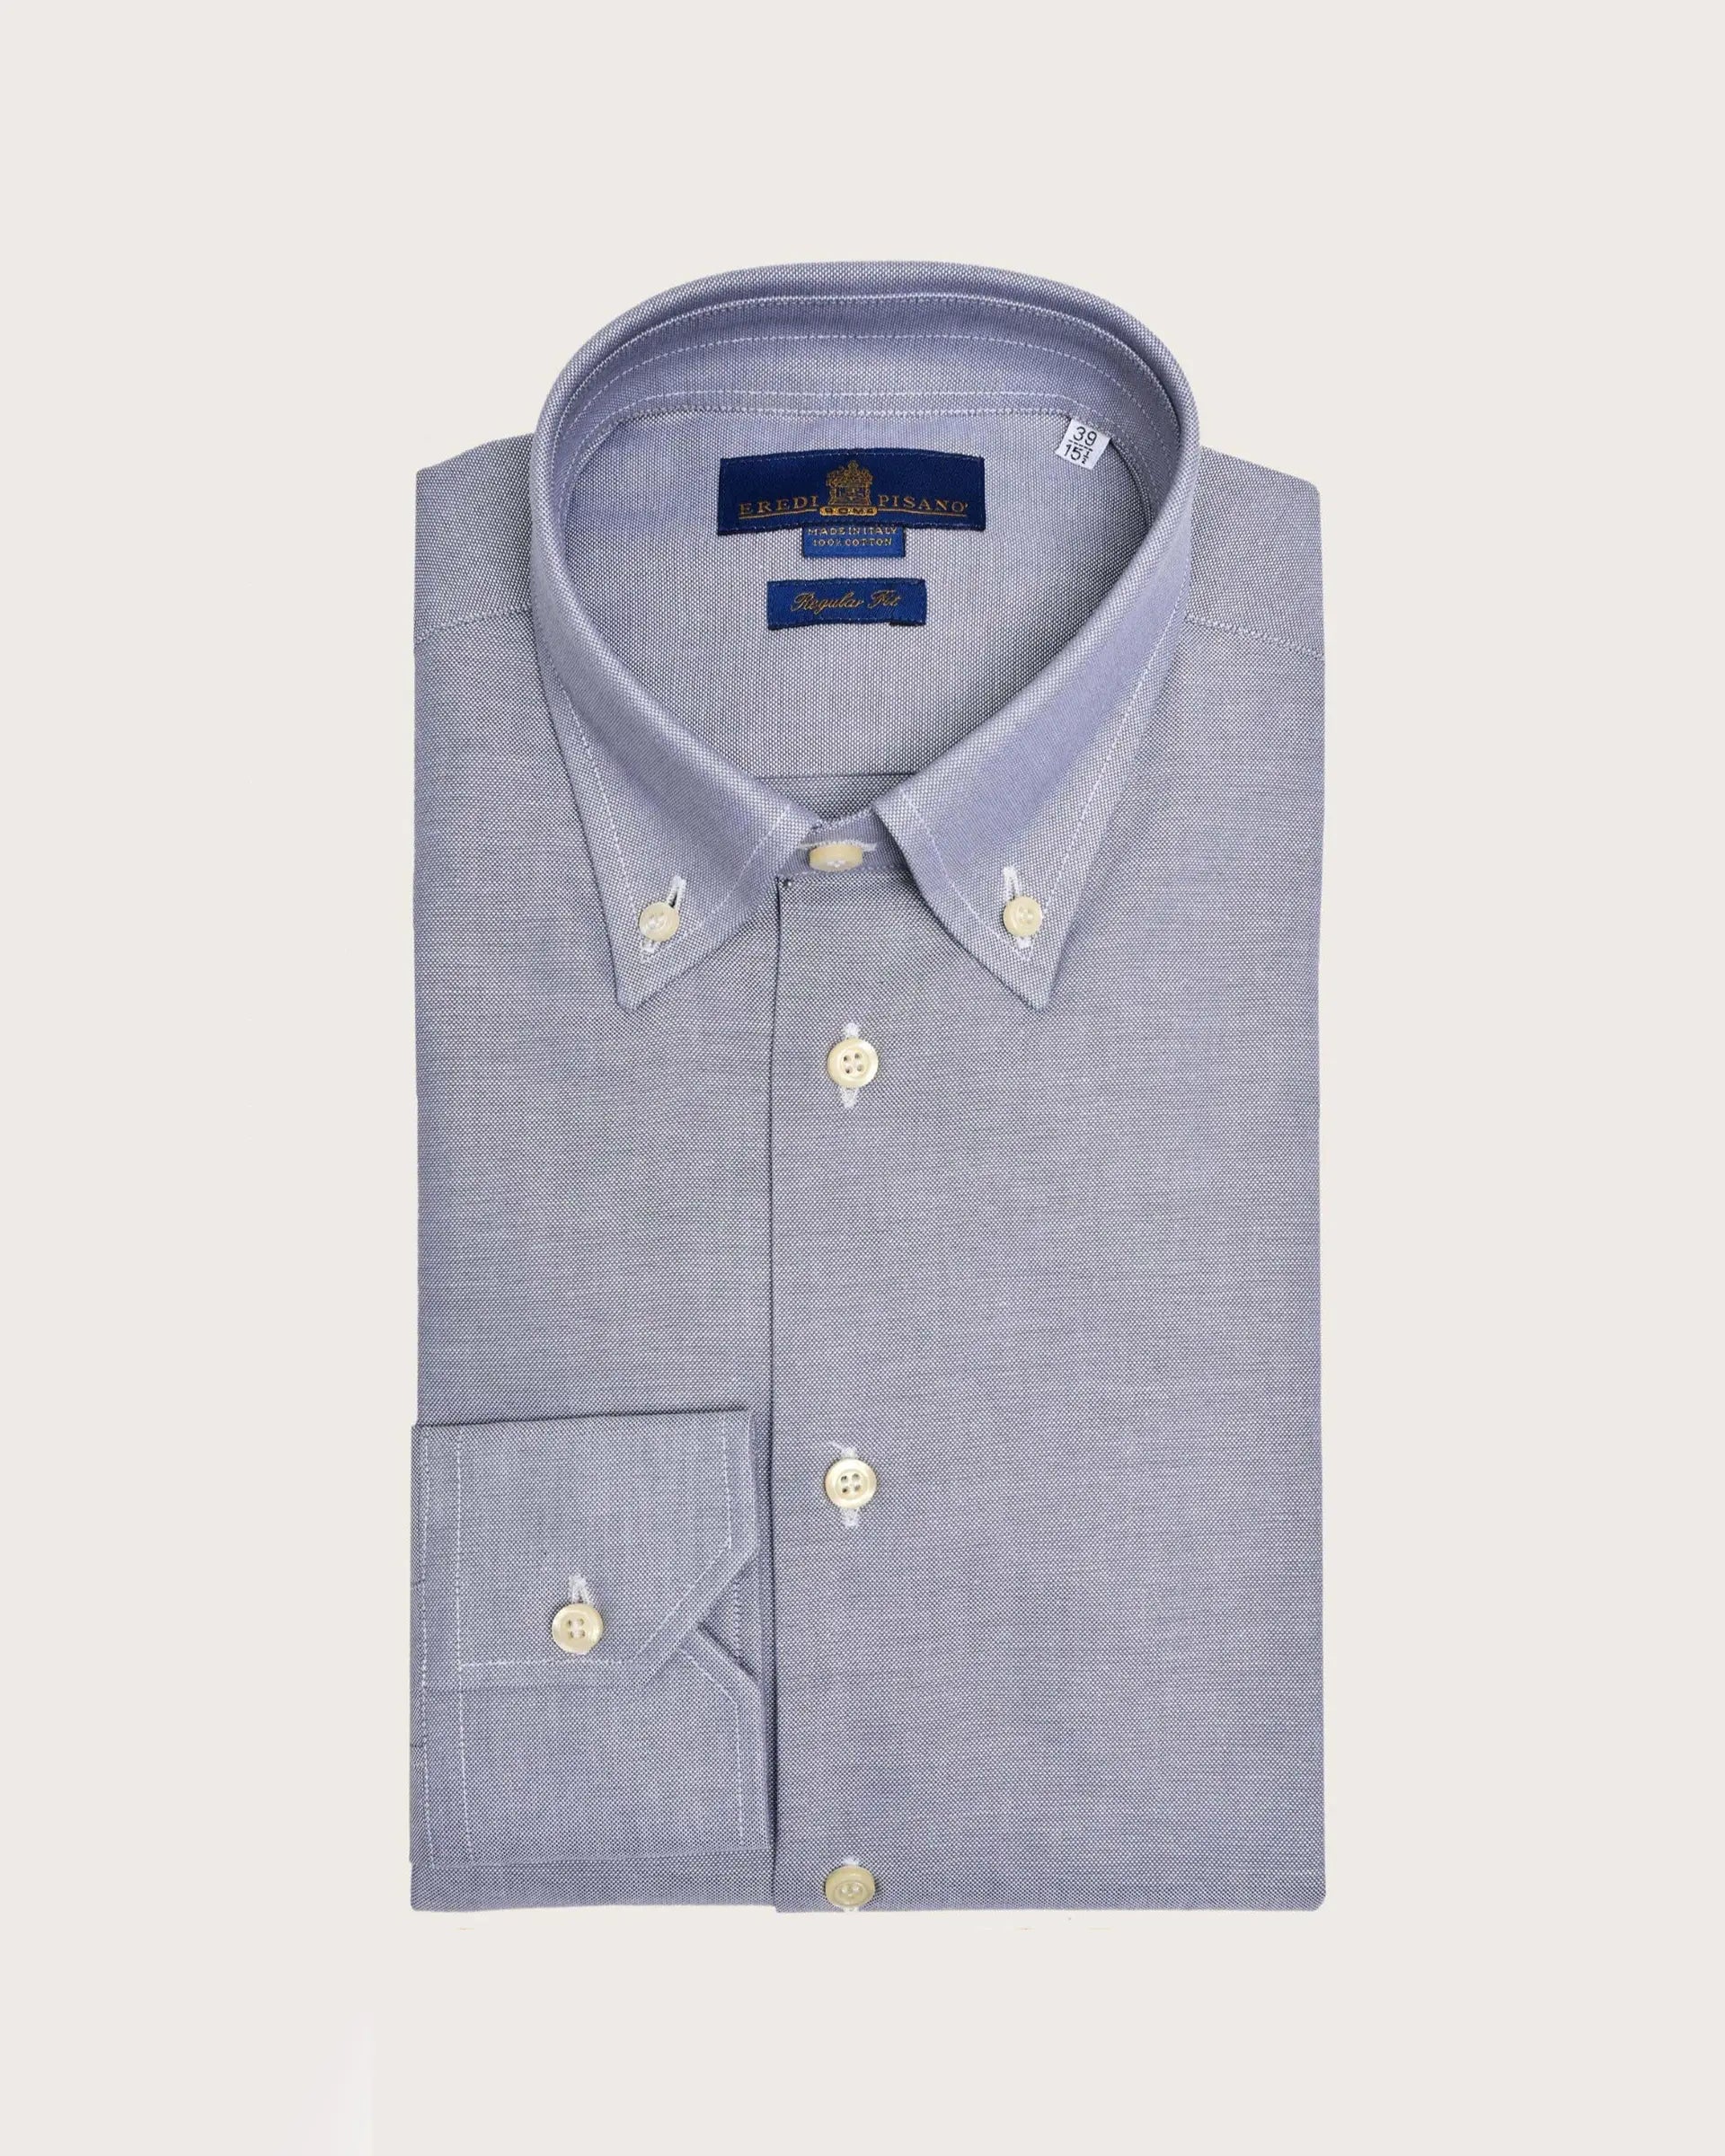 Regular fit grey shirt with button down collar